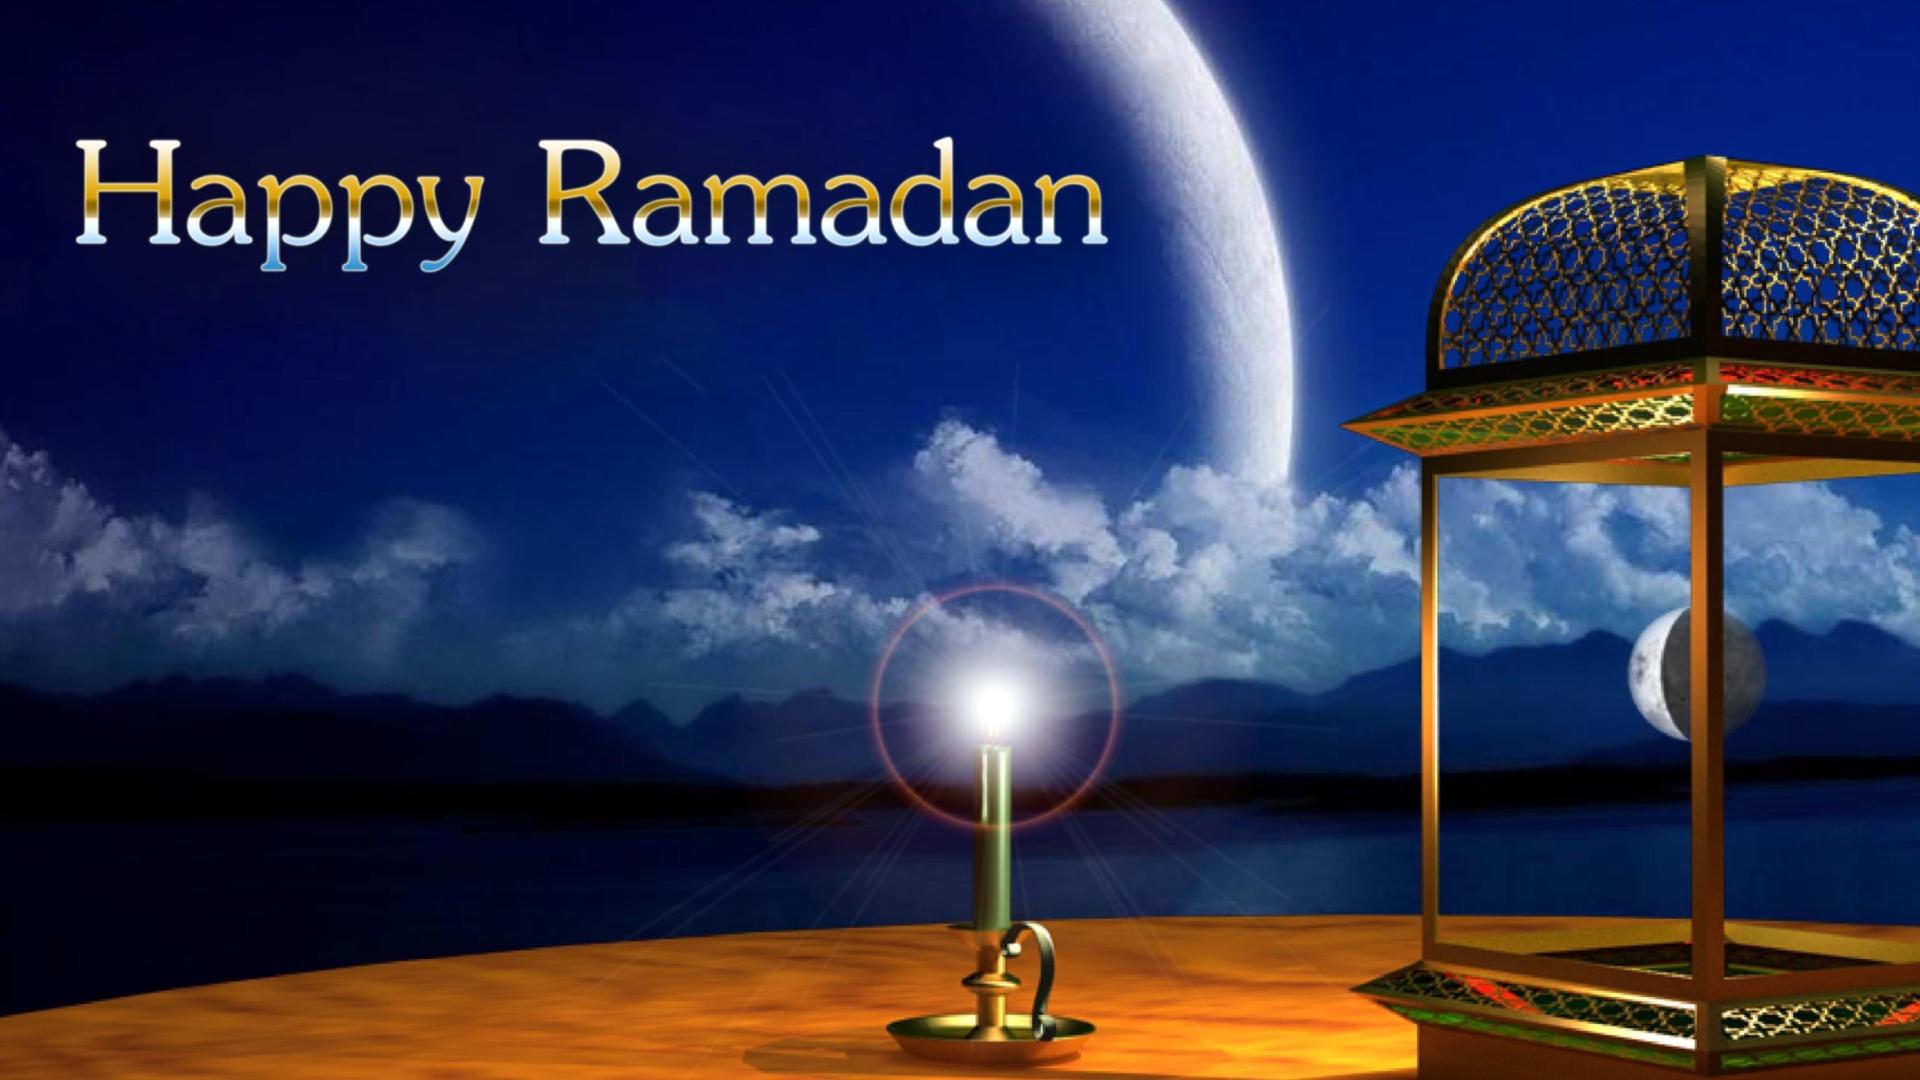 Happy Ramadan wallpaper 1920x1080